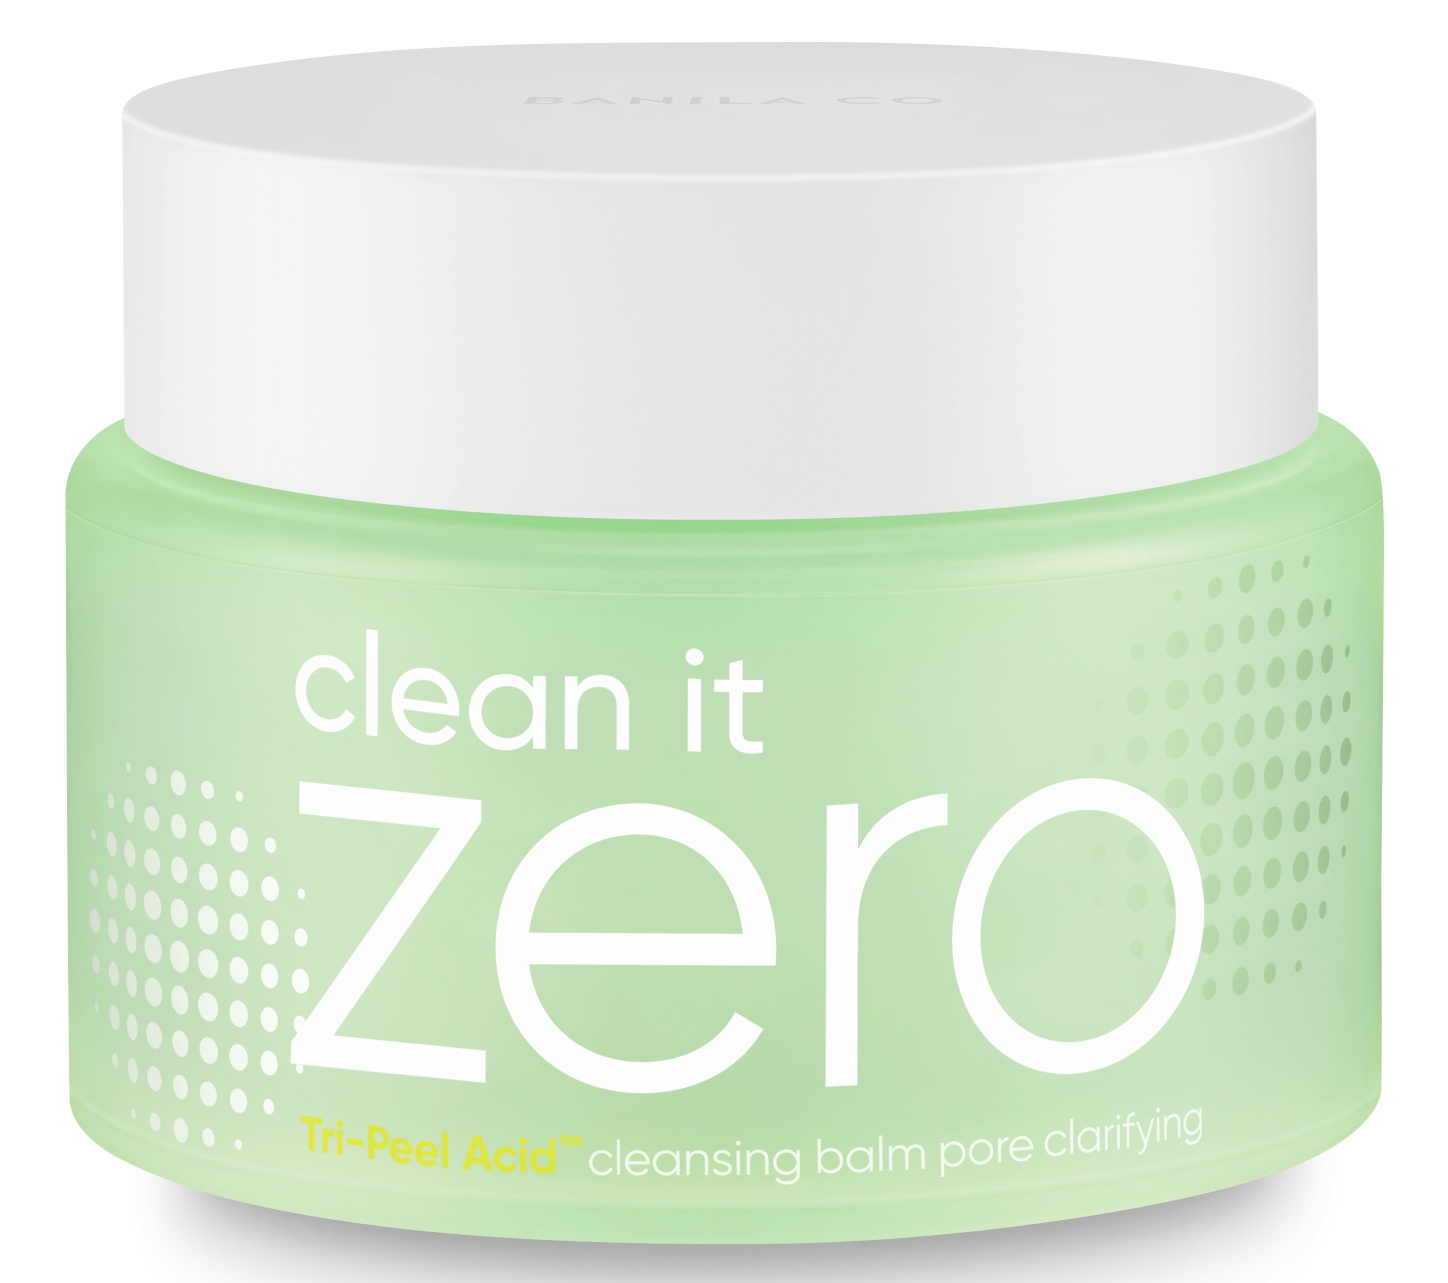 Banila Co Clean It Zero Pore Clarifying